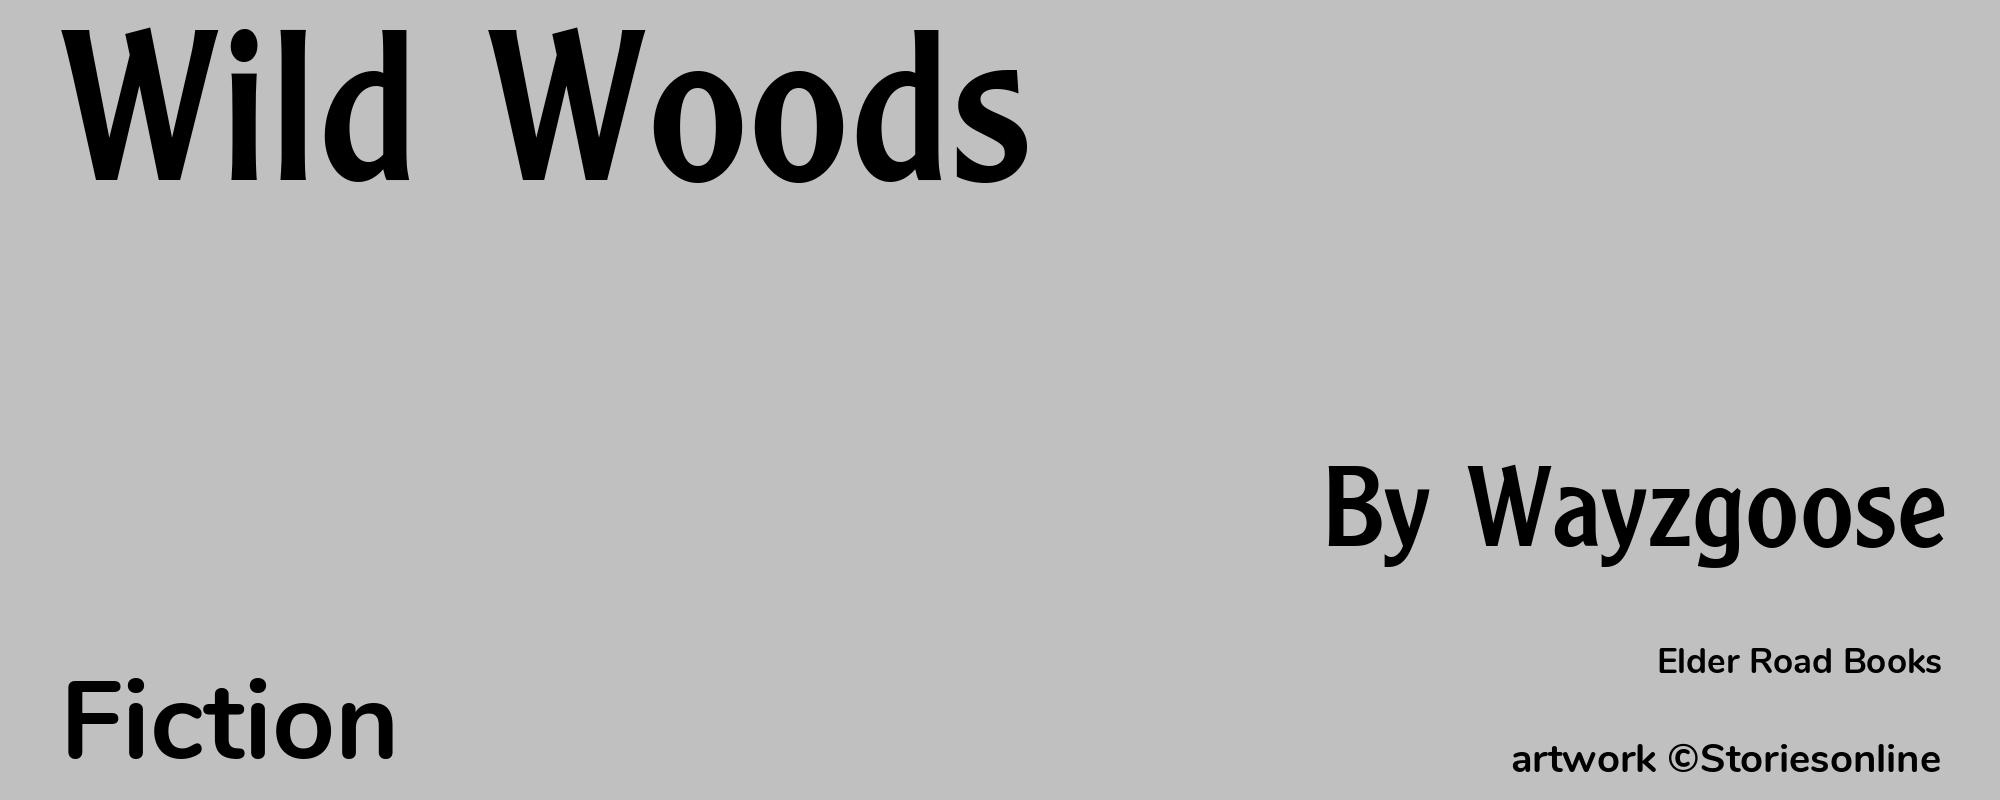 Wild Woods - Cover